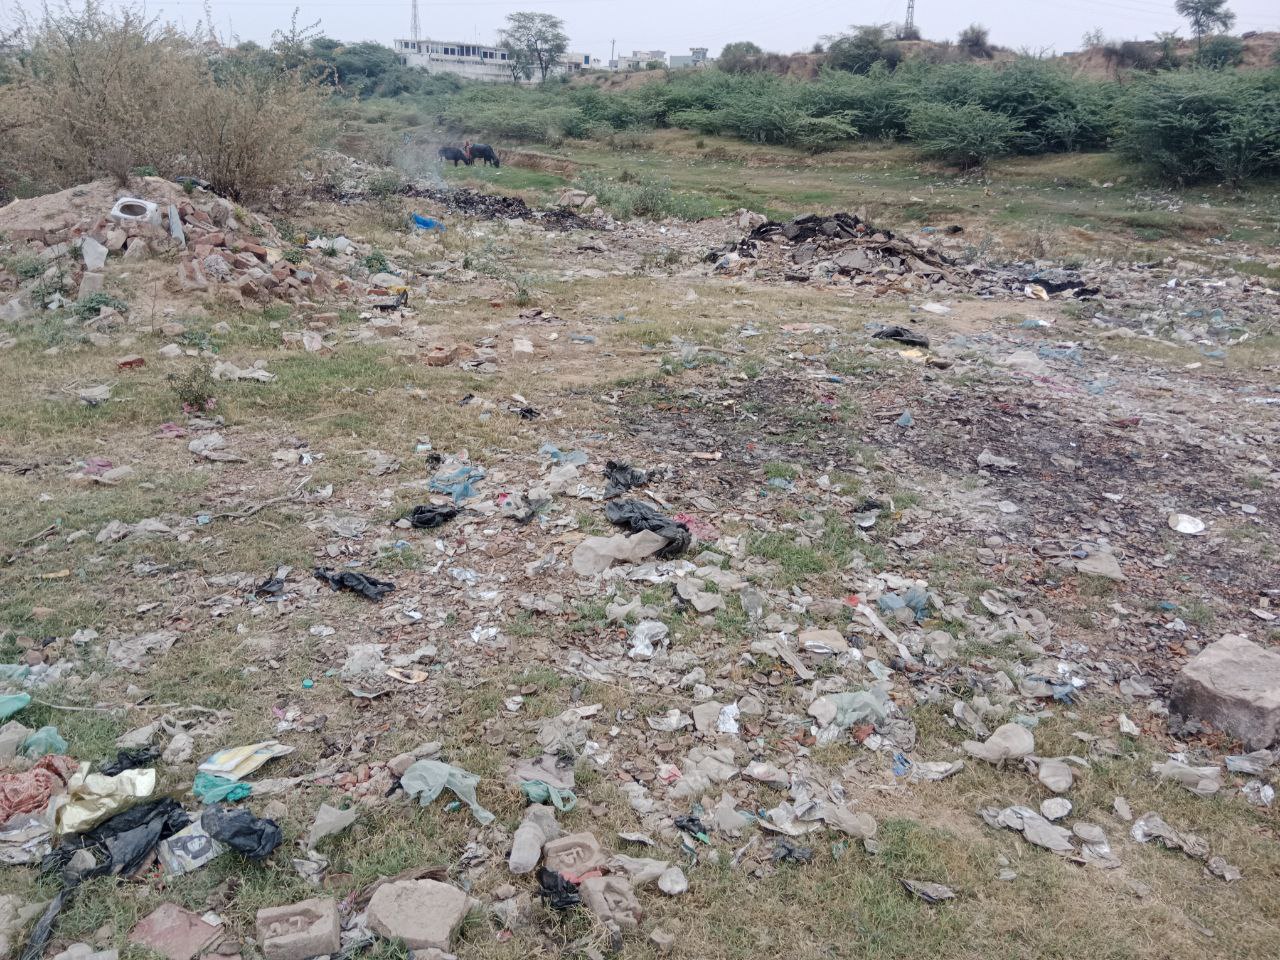 VIDEO: तीर्थनगरी श्रीमहावीरजी में कचरा डिपो बनी गंभीर नदी, दुर्गंध से रहती हालत
खराब